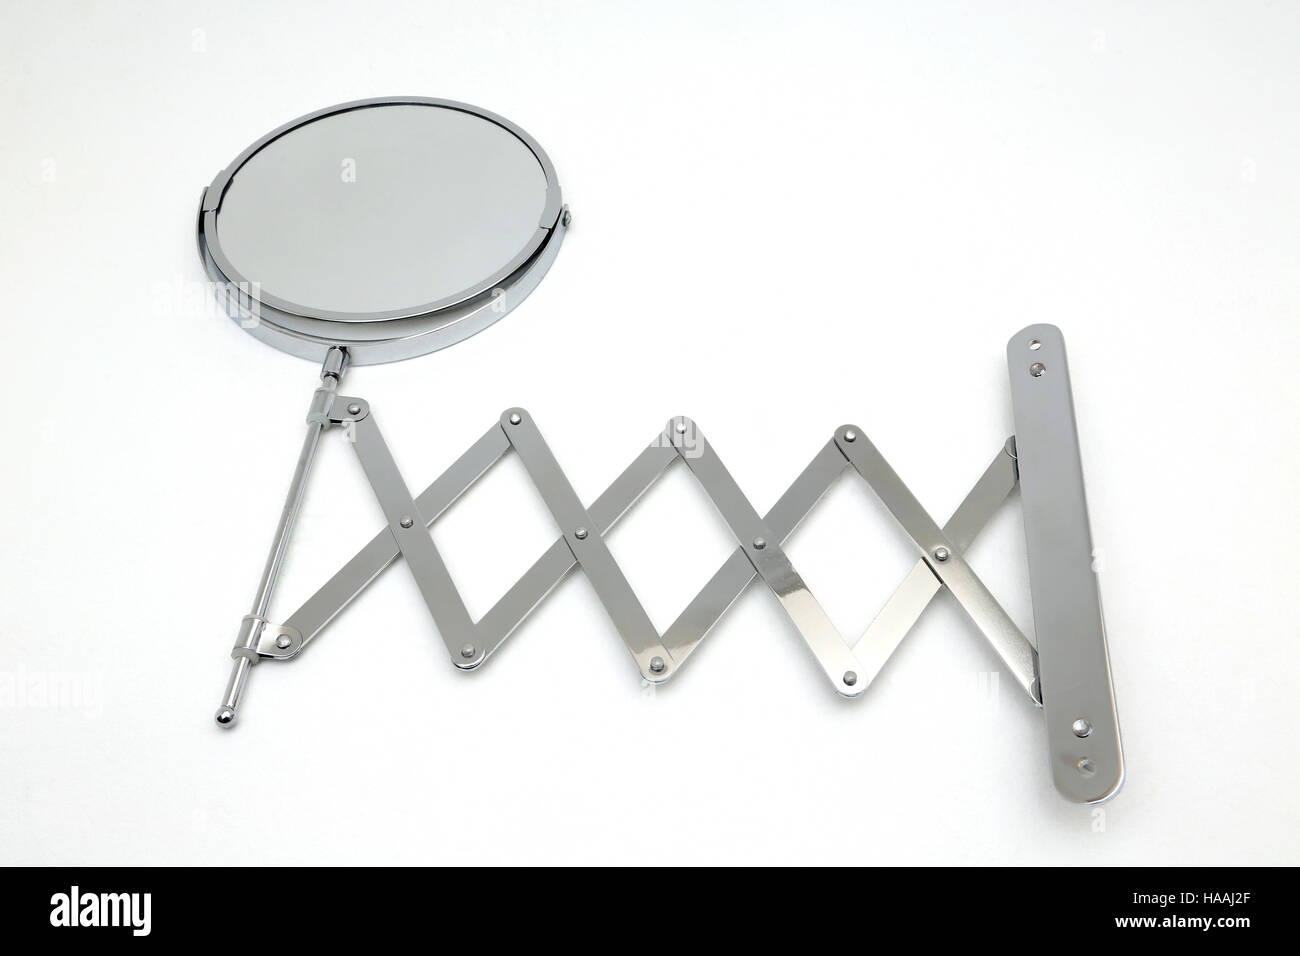 Chrome Extending Wall Mounted Shaving Mirror Stock Photo